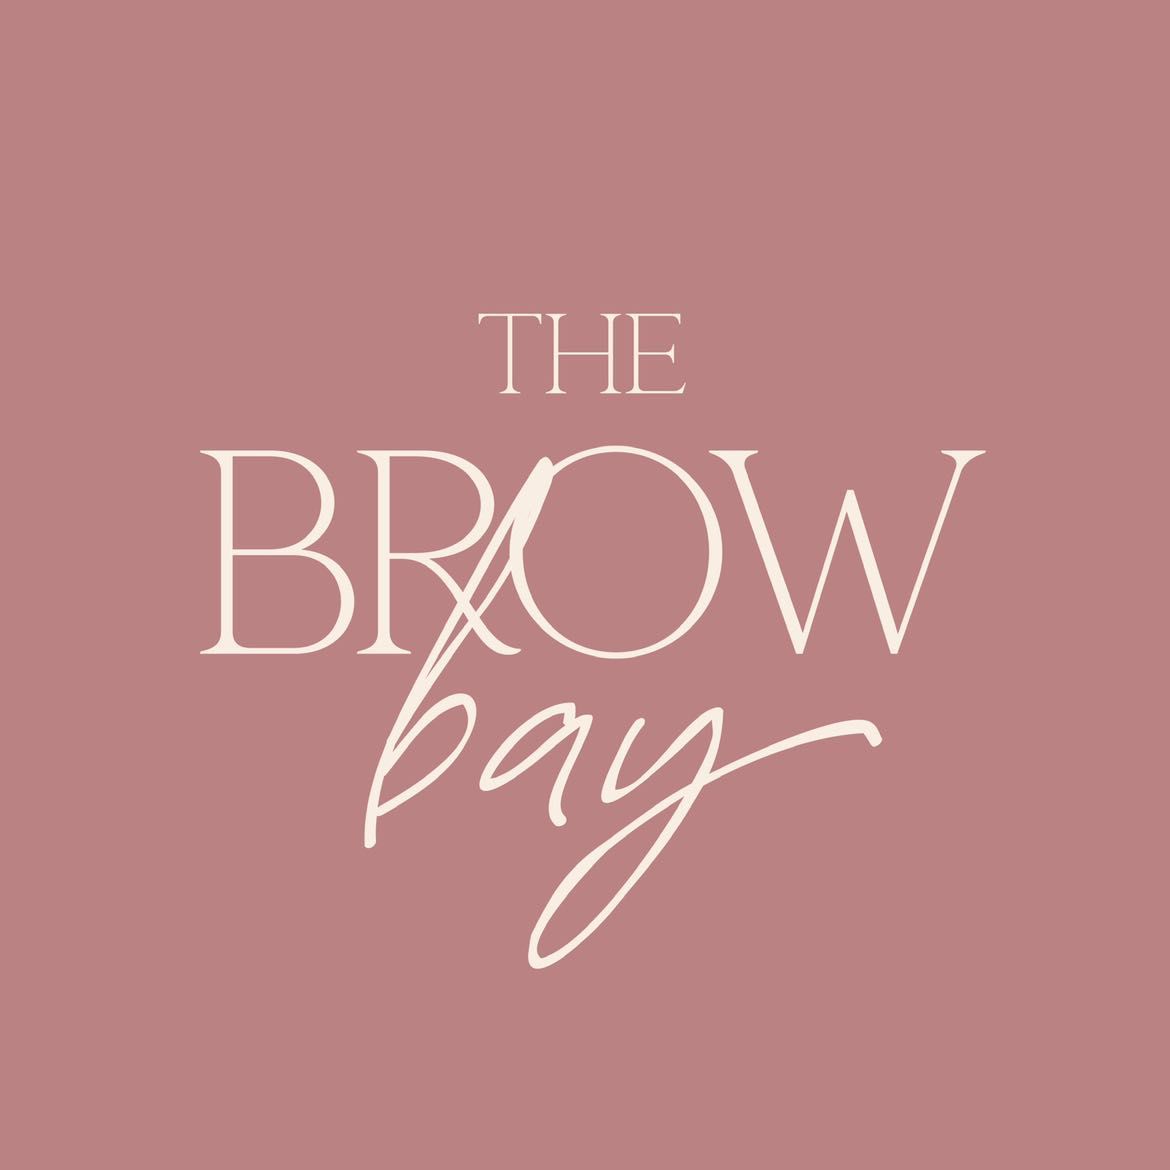 The Brow Bay, 45-47 Southgate, 07534046207, HX5 0BW, Elland